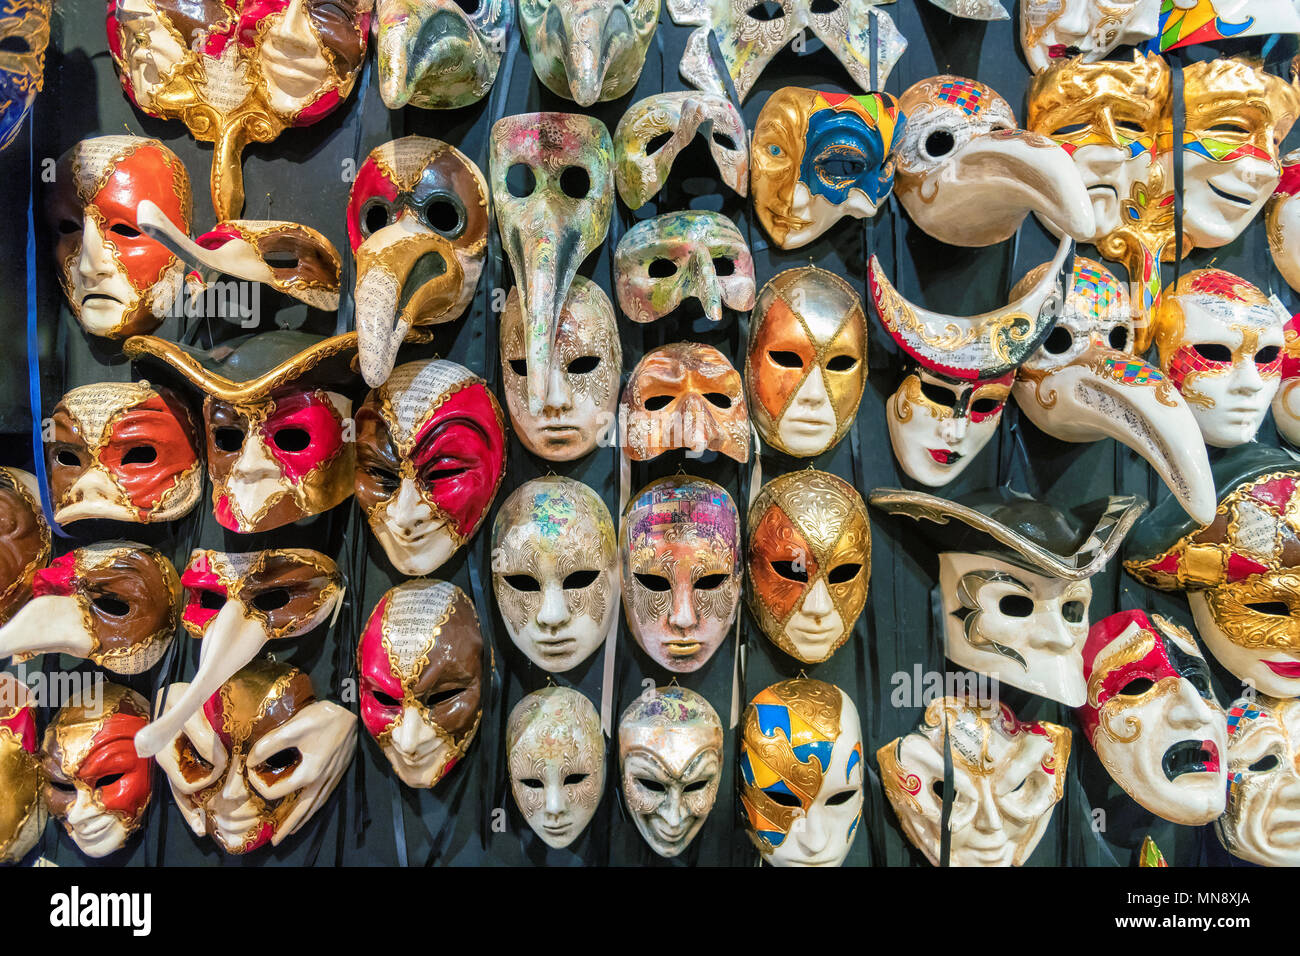 Máscara veneciana de Pared en blanco – MaskshopVenice.com